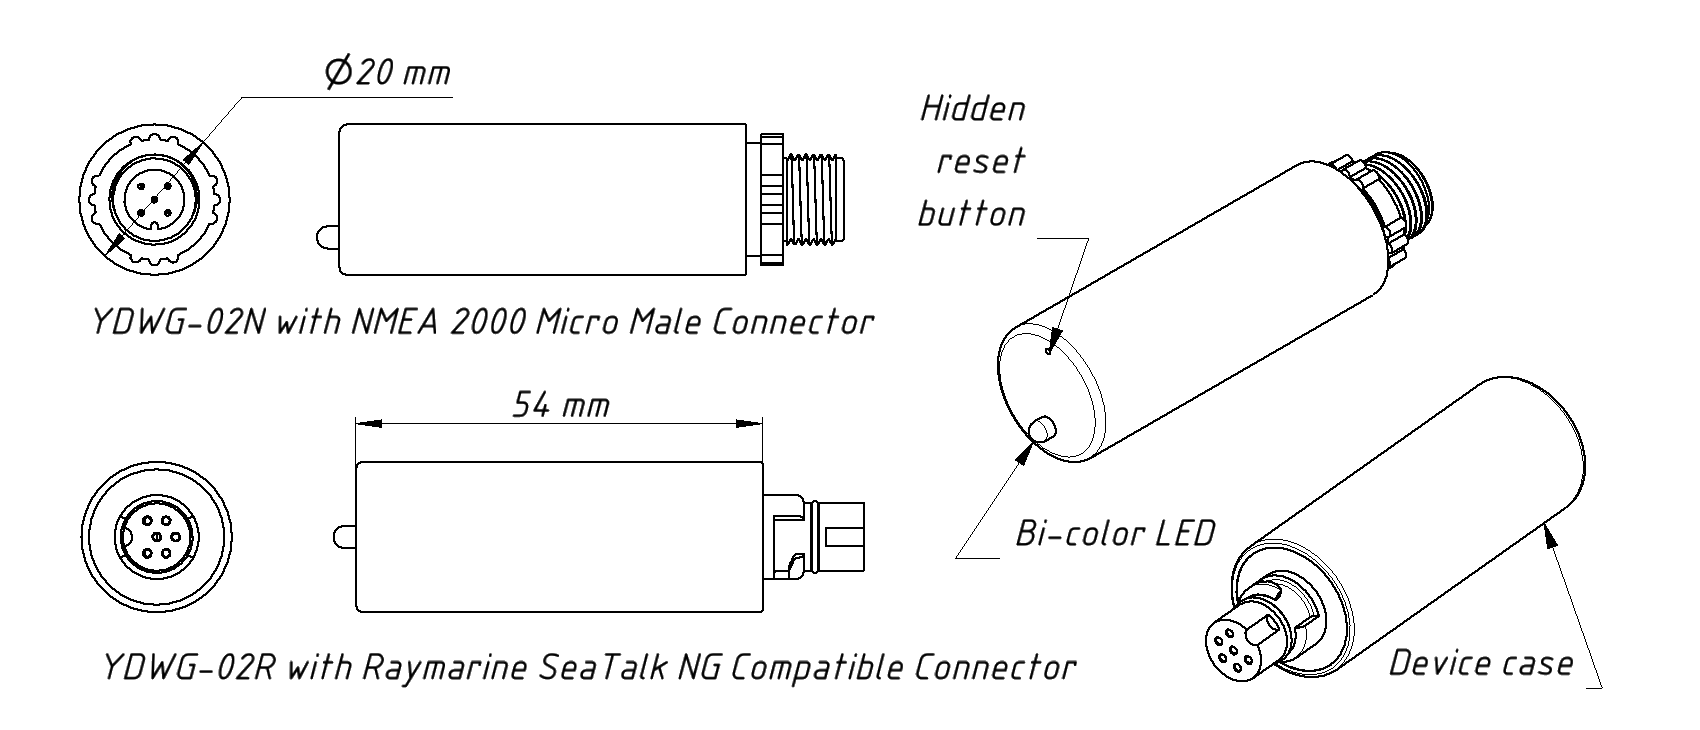 Drawing of YDWG-02N and YDWG-02R models of Gateway